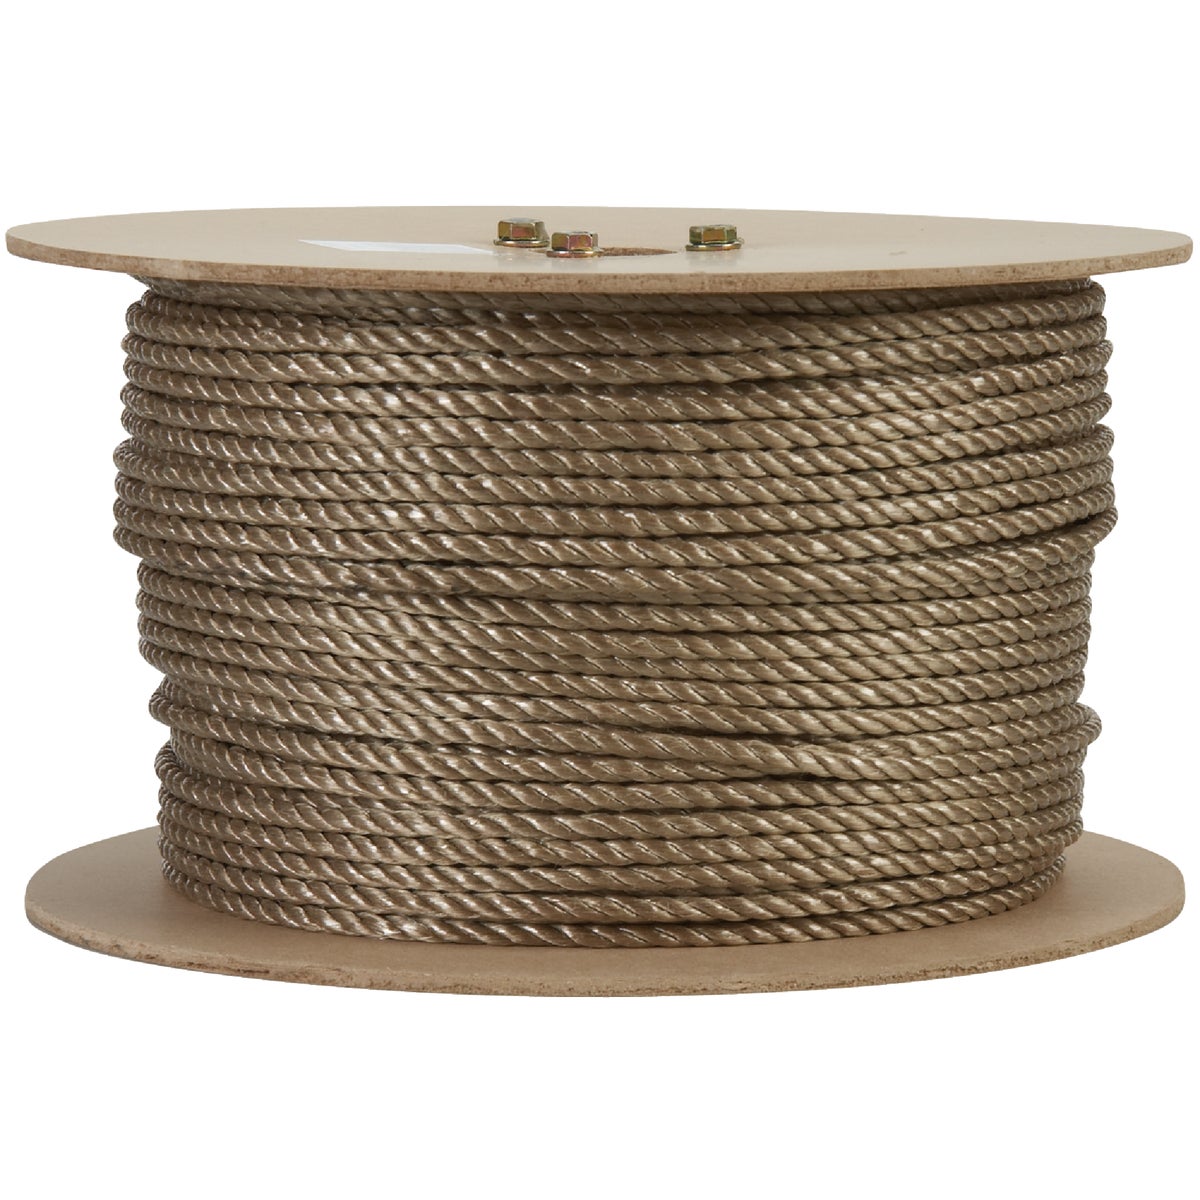 Item 707414, Marine quality polypropylene rope.